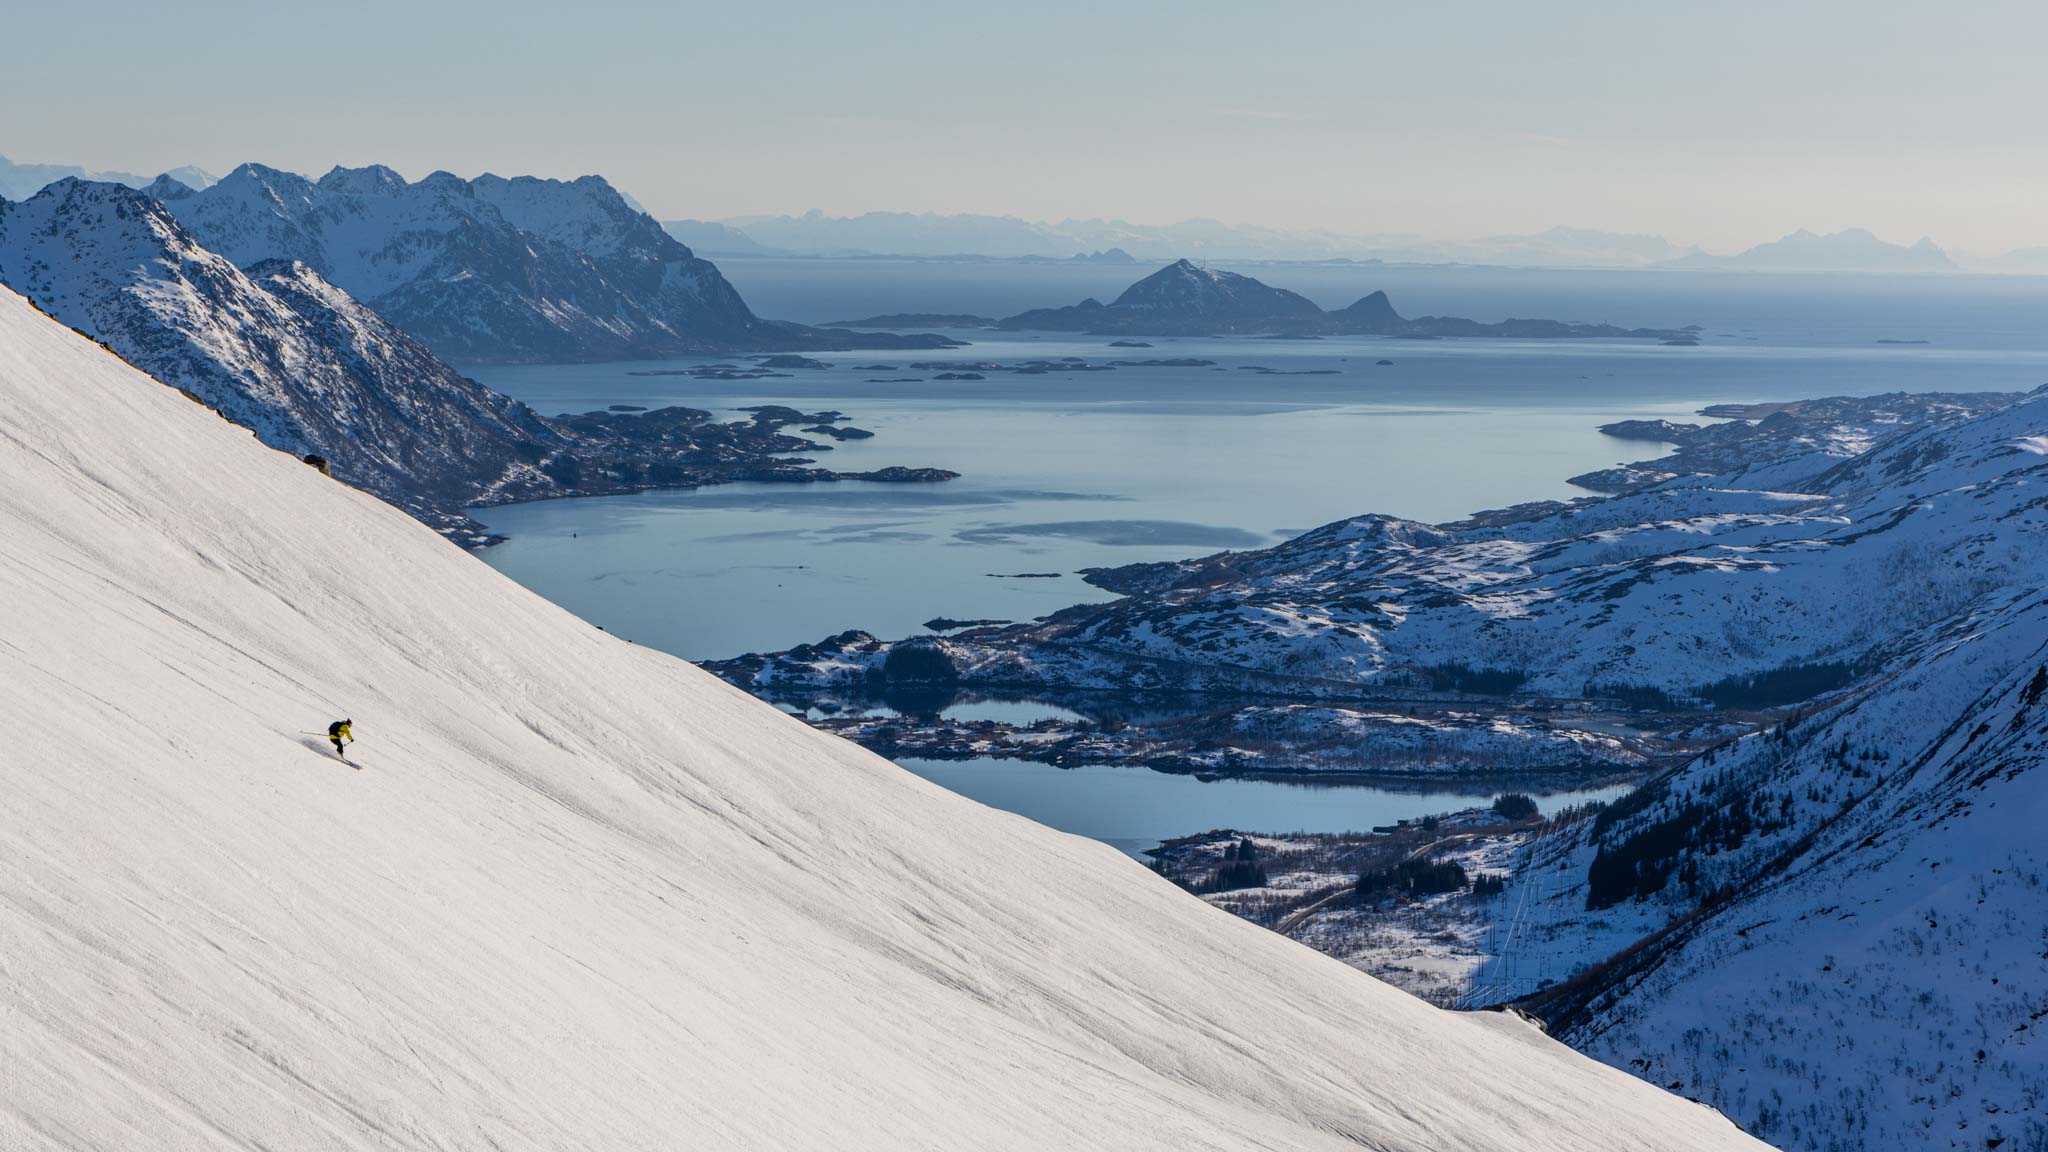 Tolles Ambiente auf Skitour in Norwegen.